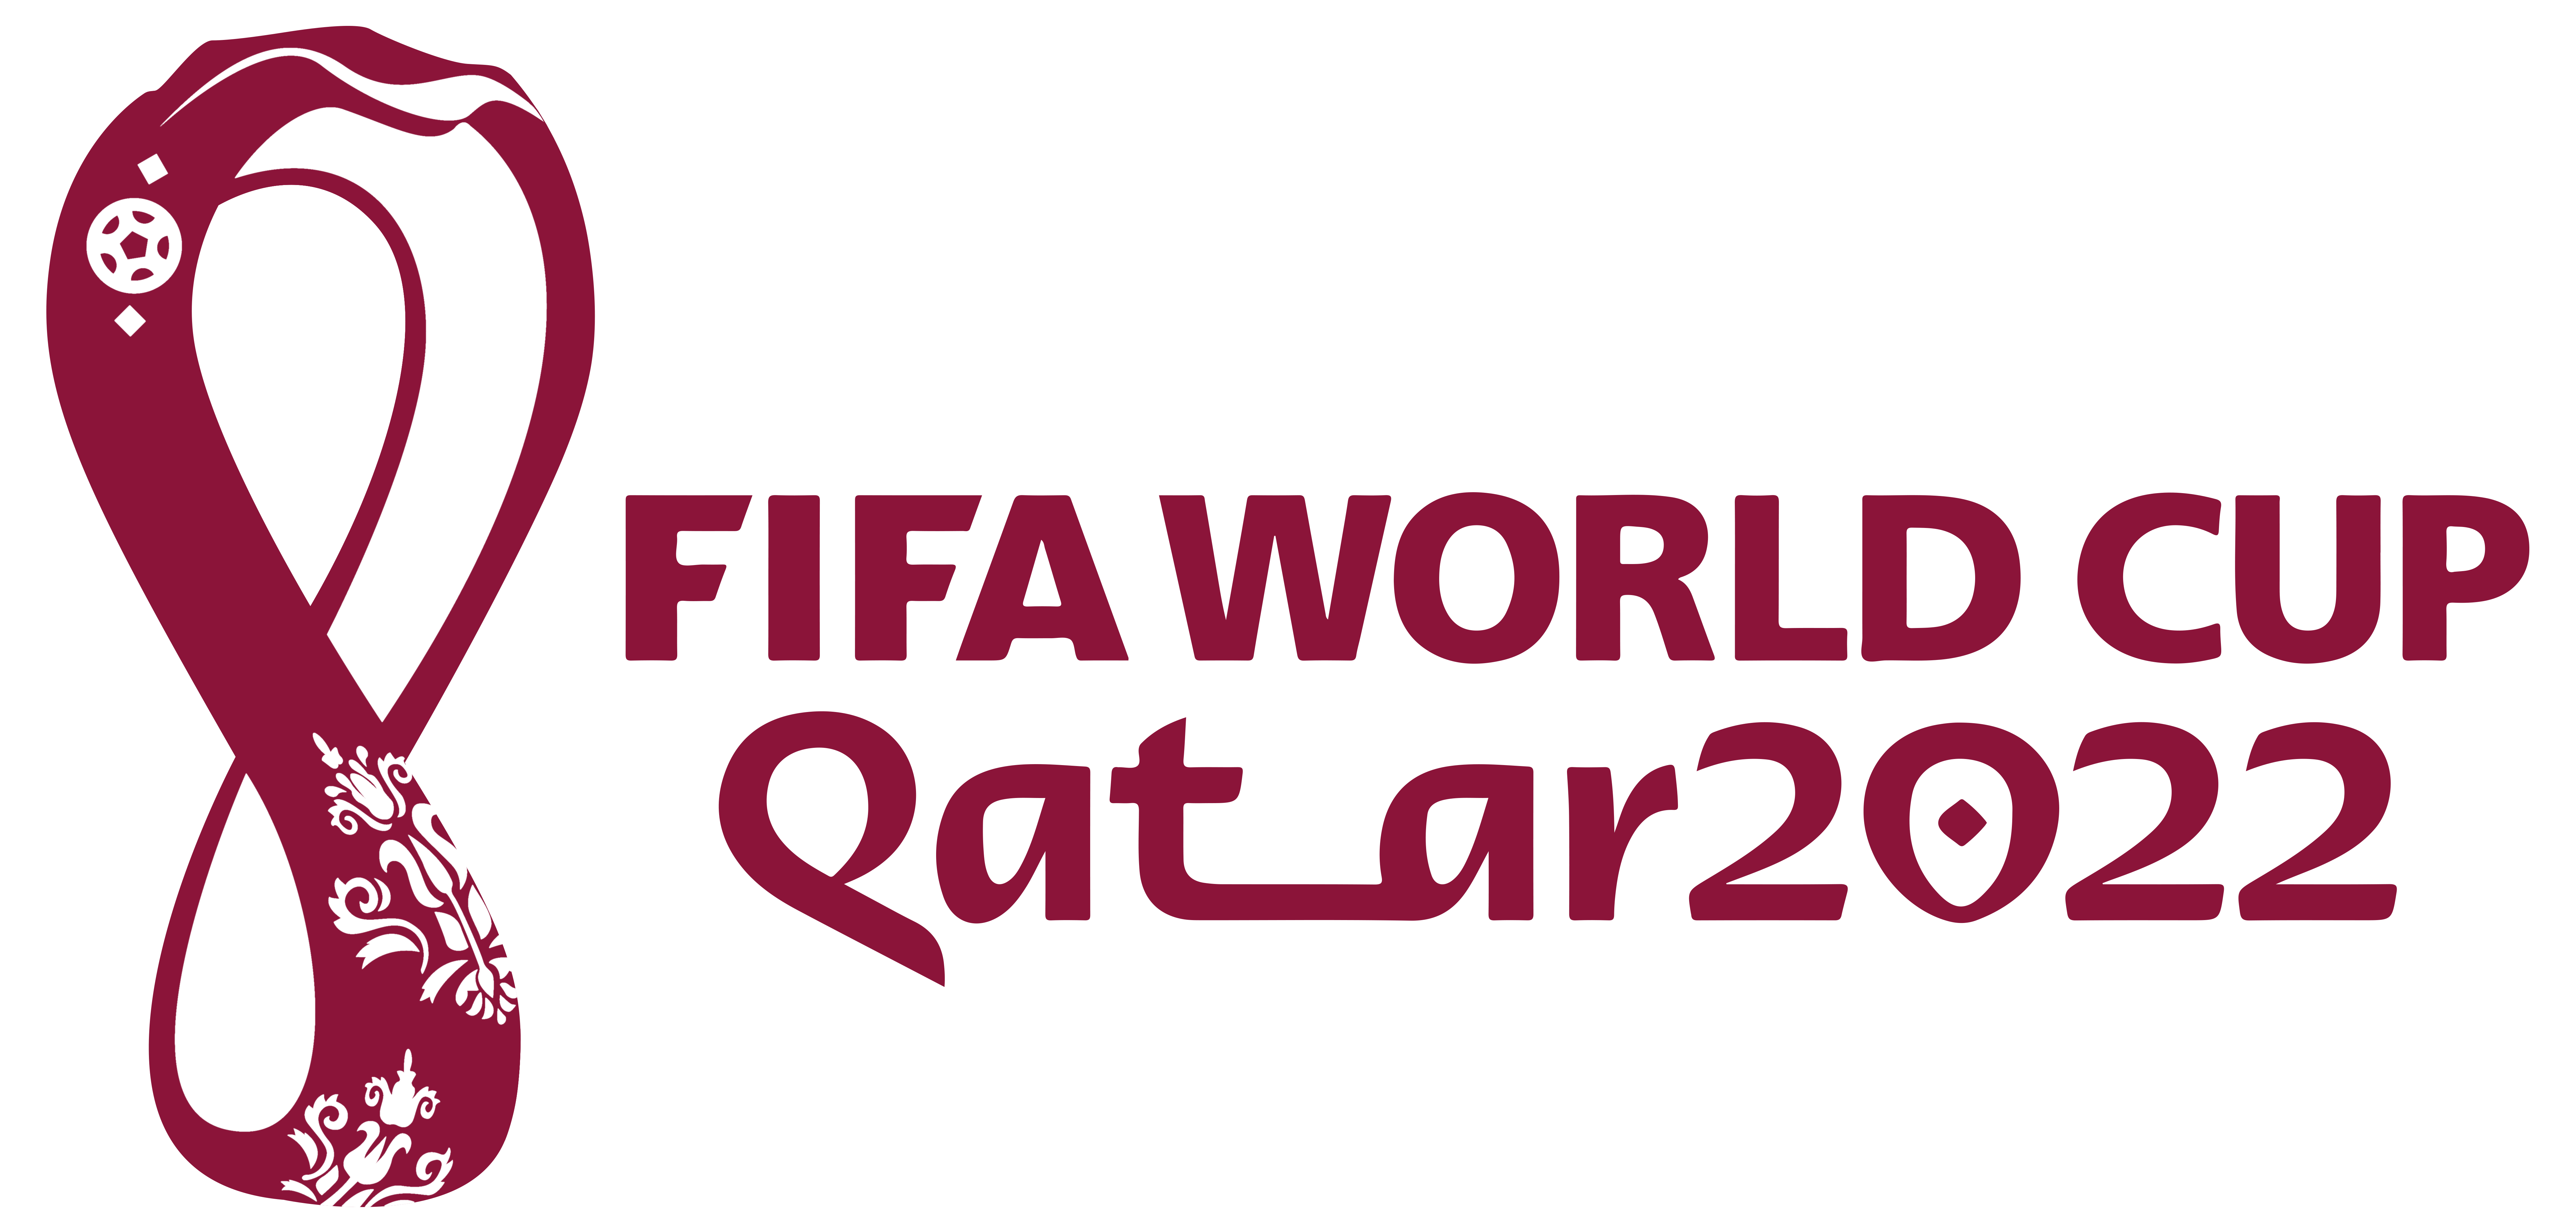 Qatar 2022 World Cup logo concept